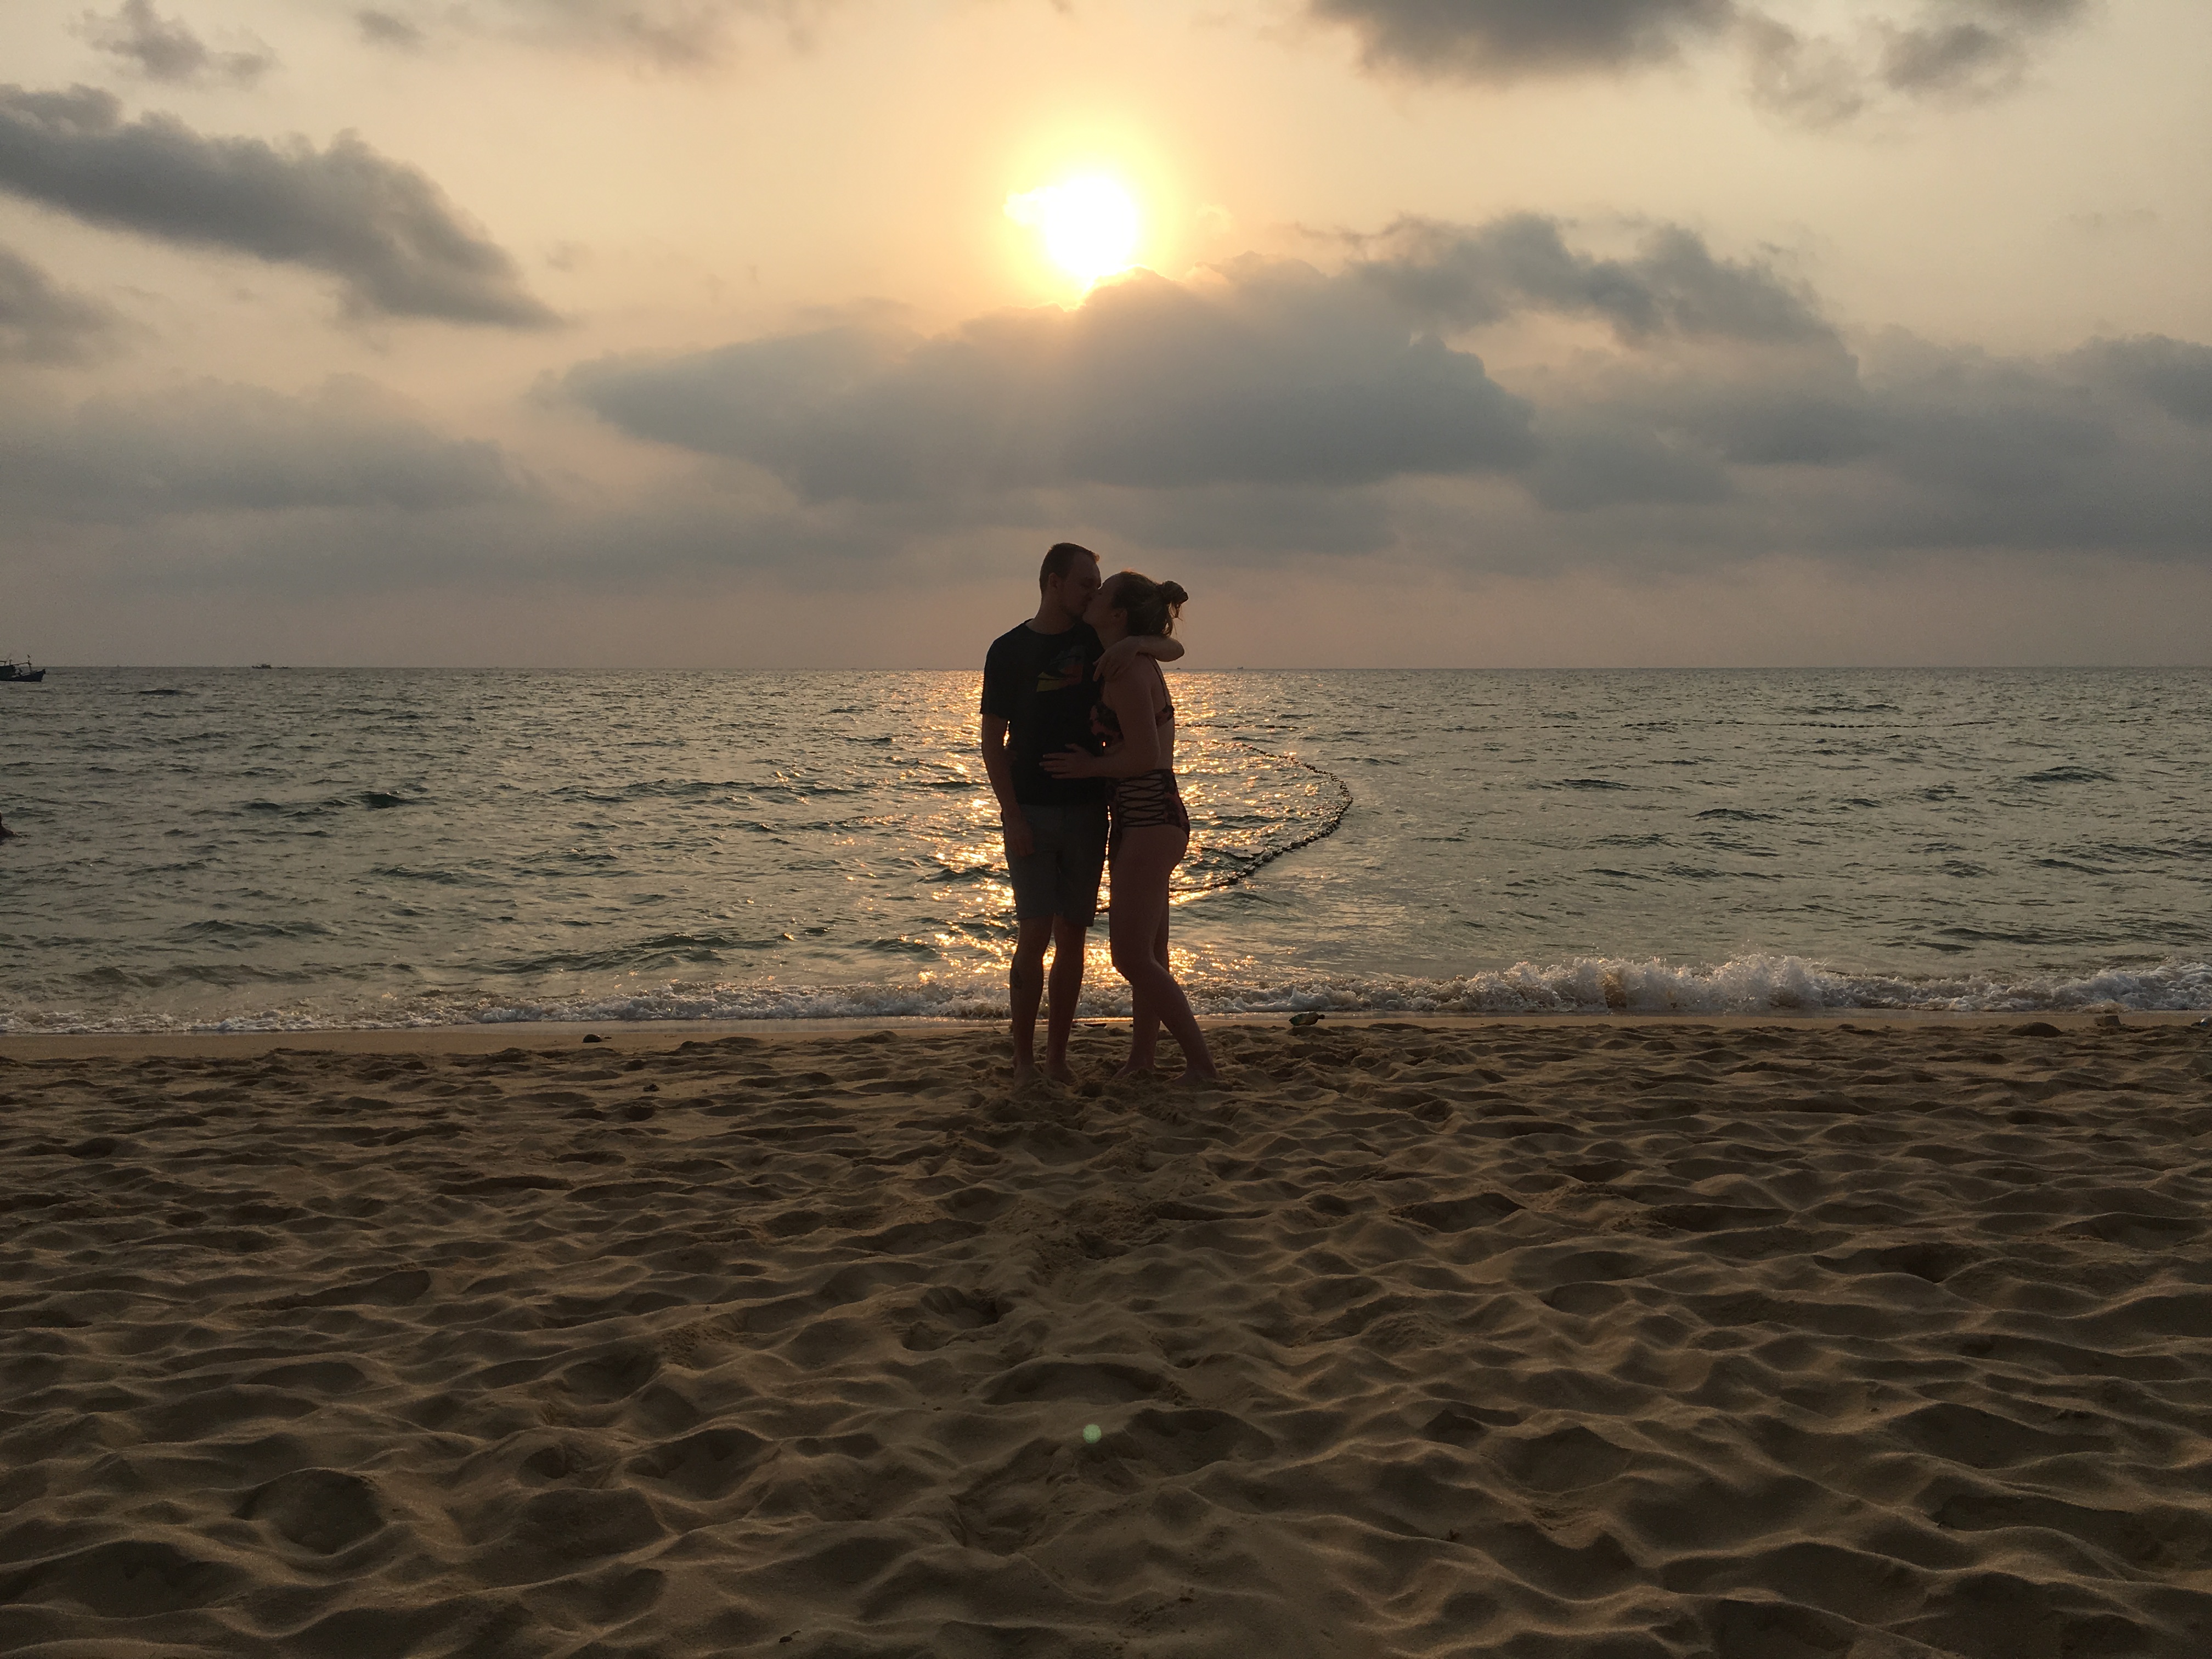 Ben and Erinn on the beach in Phu Quoc, Vietnam.